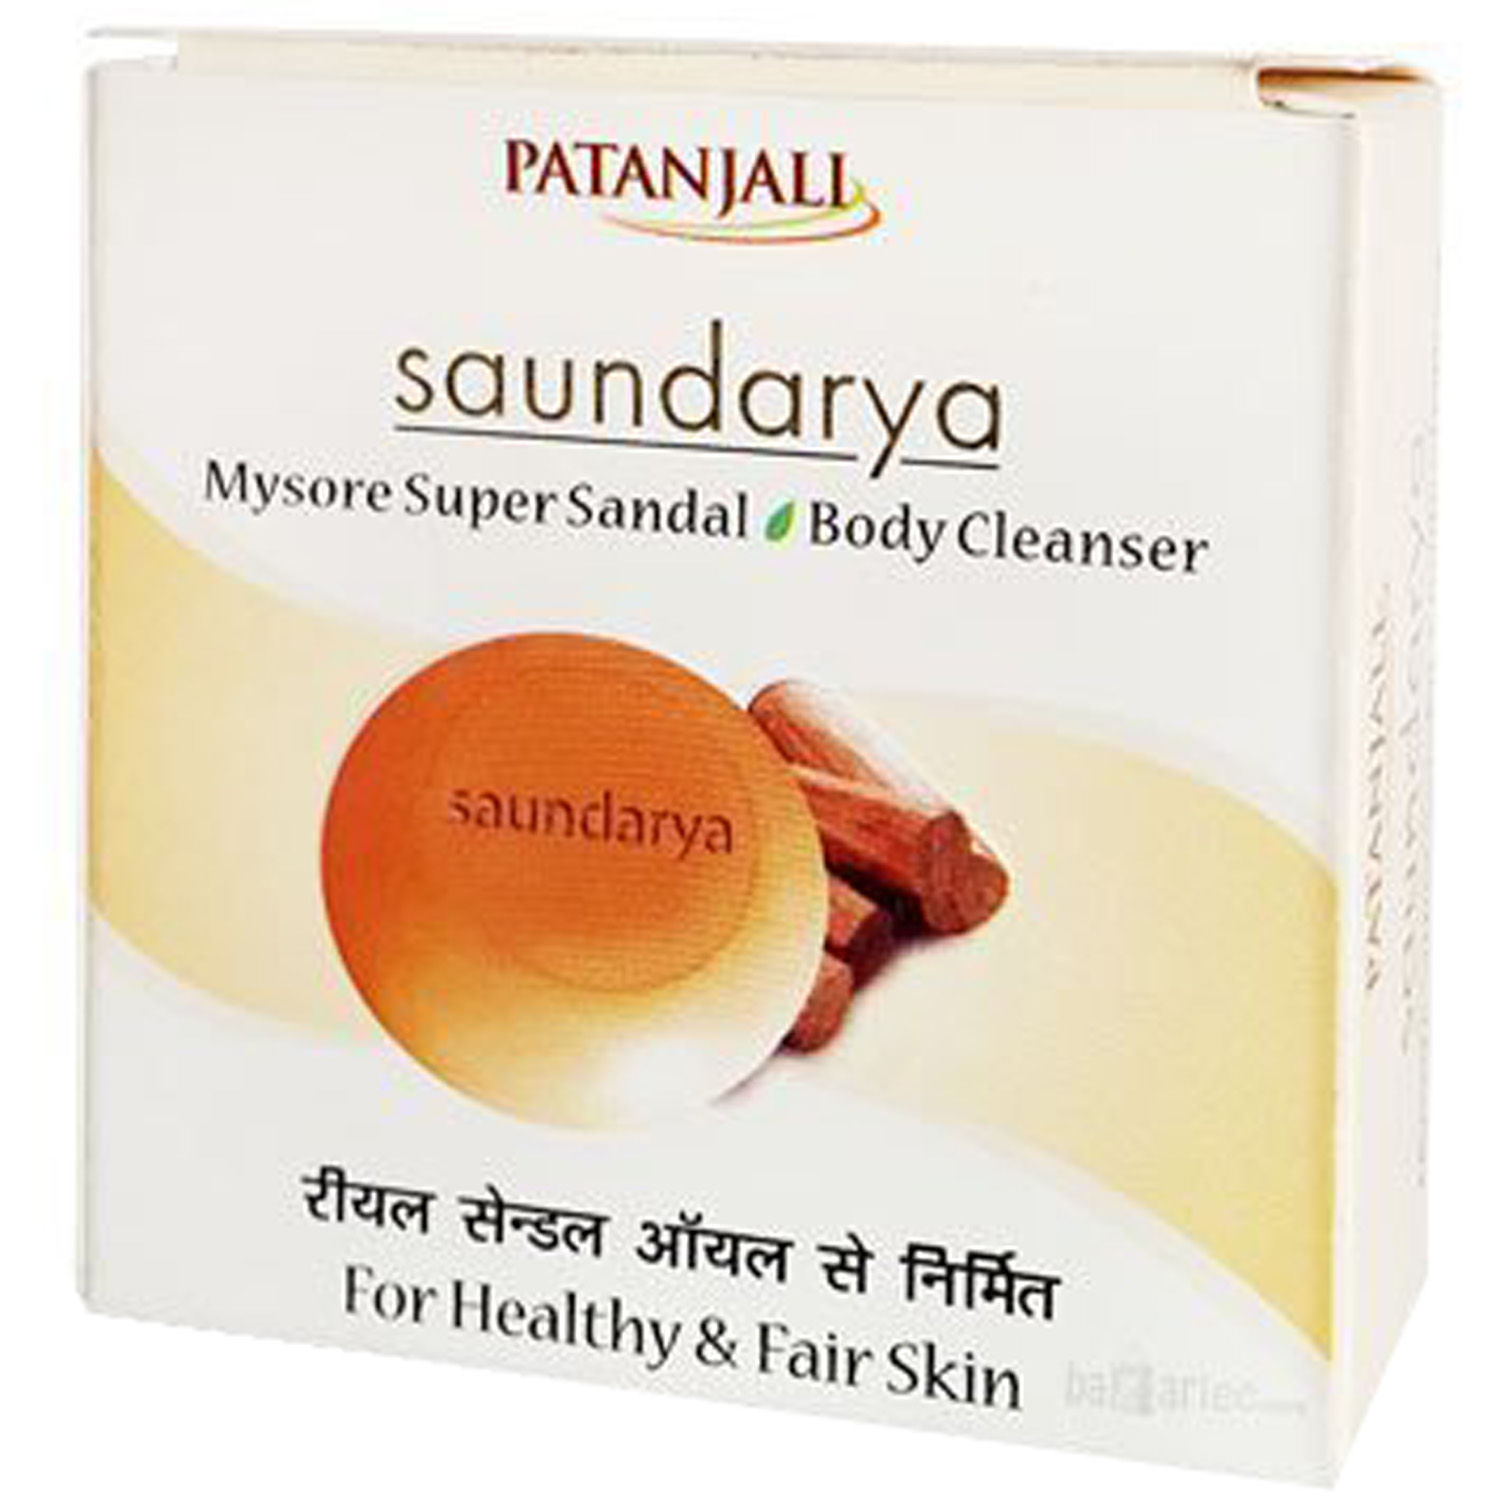 Patanjali Saundarya Sandal Body Cleanser Soap, 75 gm, Pack of 1 